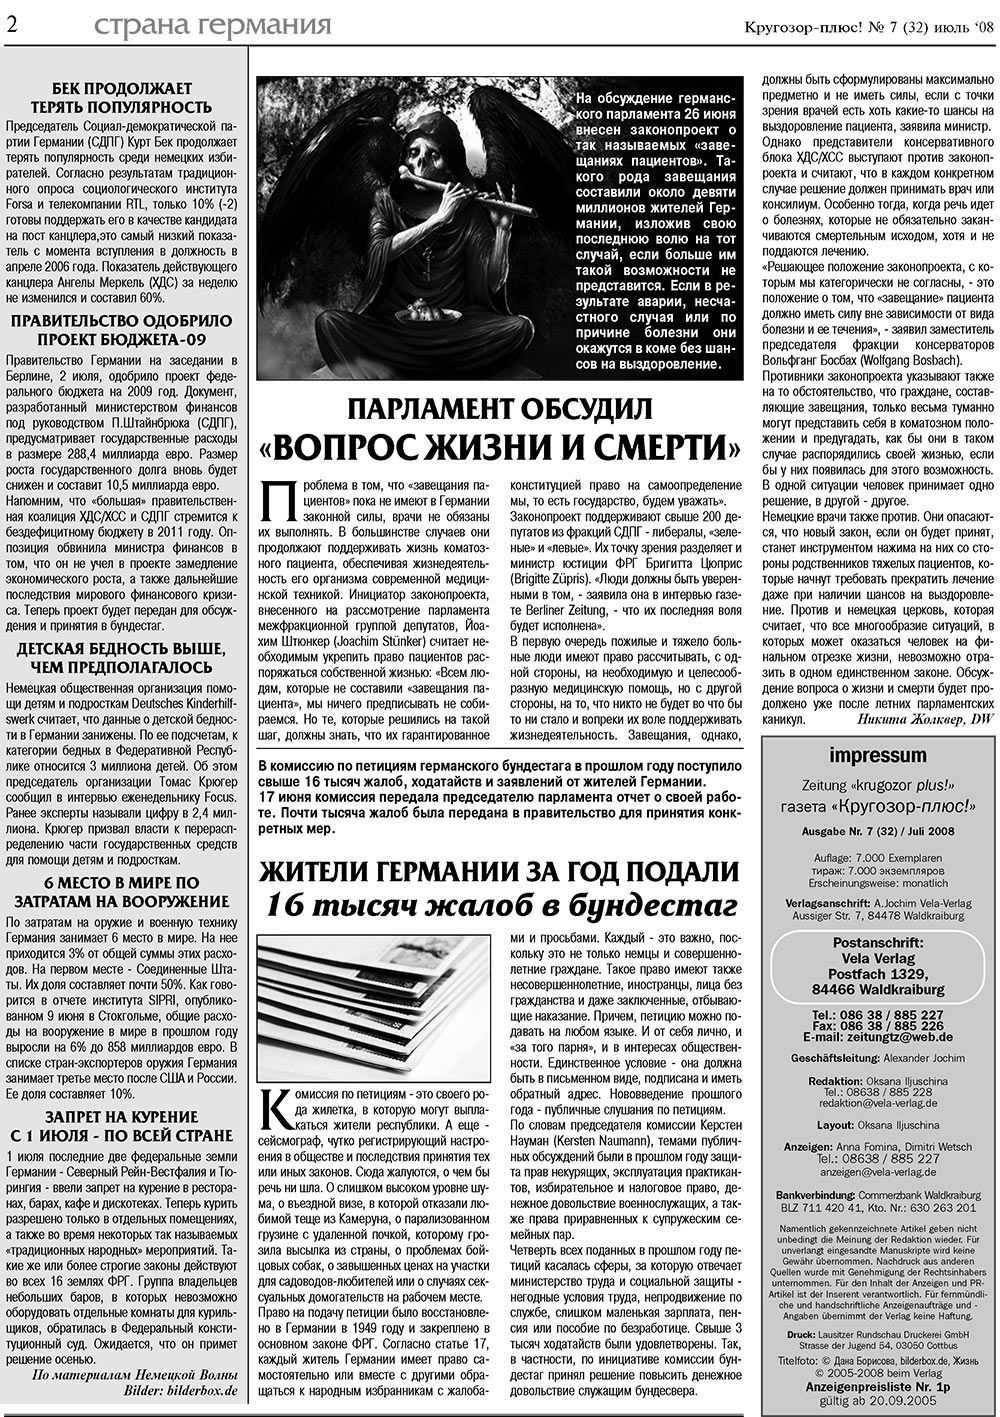 Кругозор плюс! (газета). 2008 год, номер 7, стр. 2